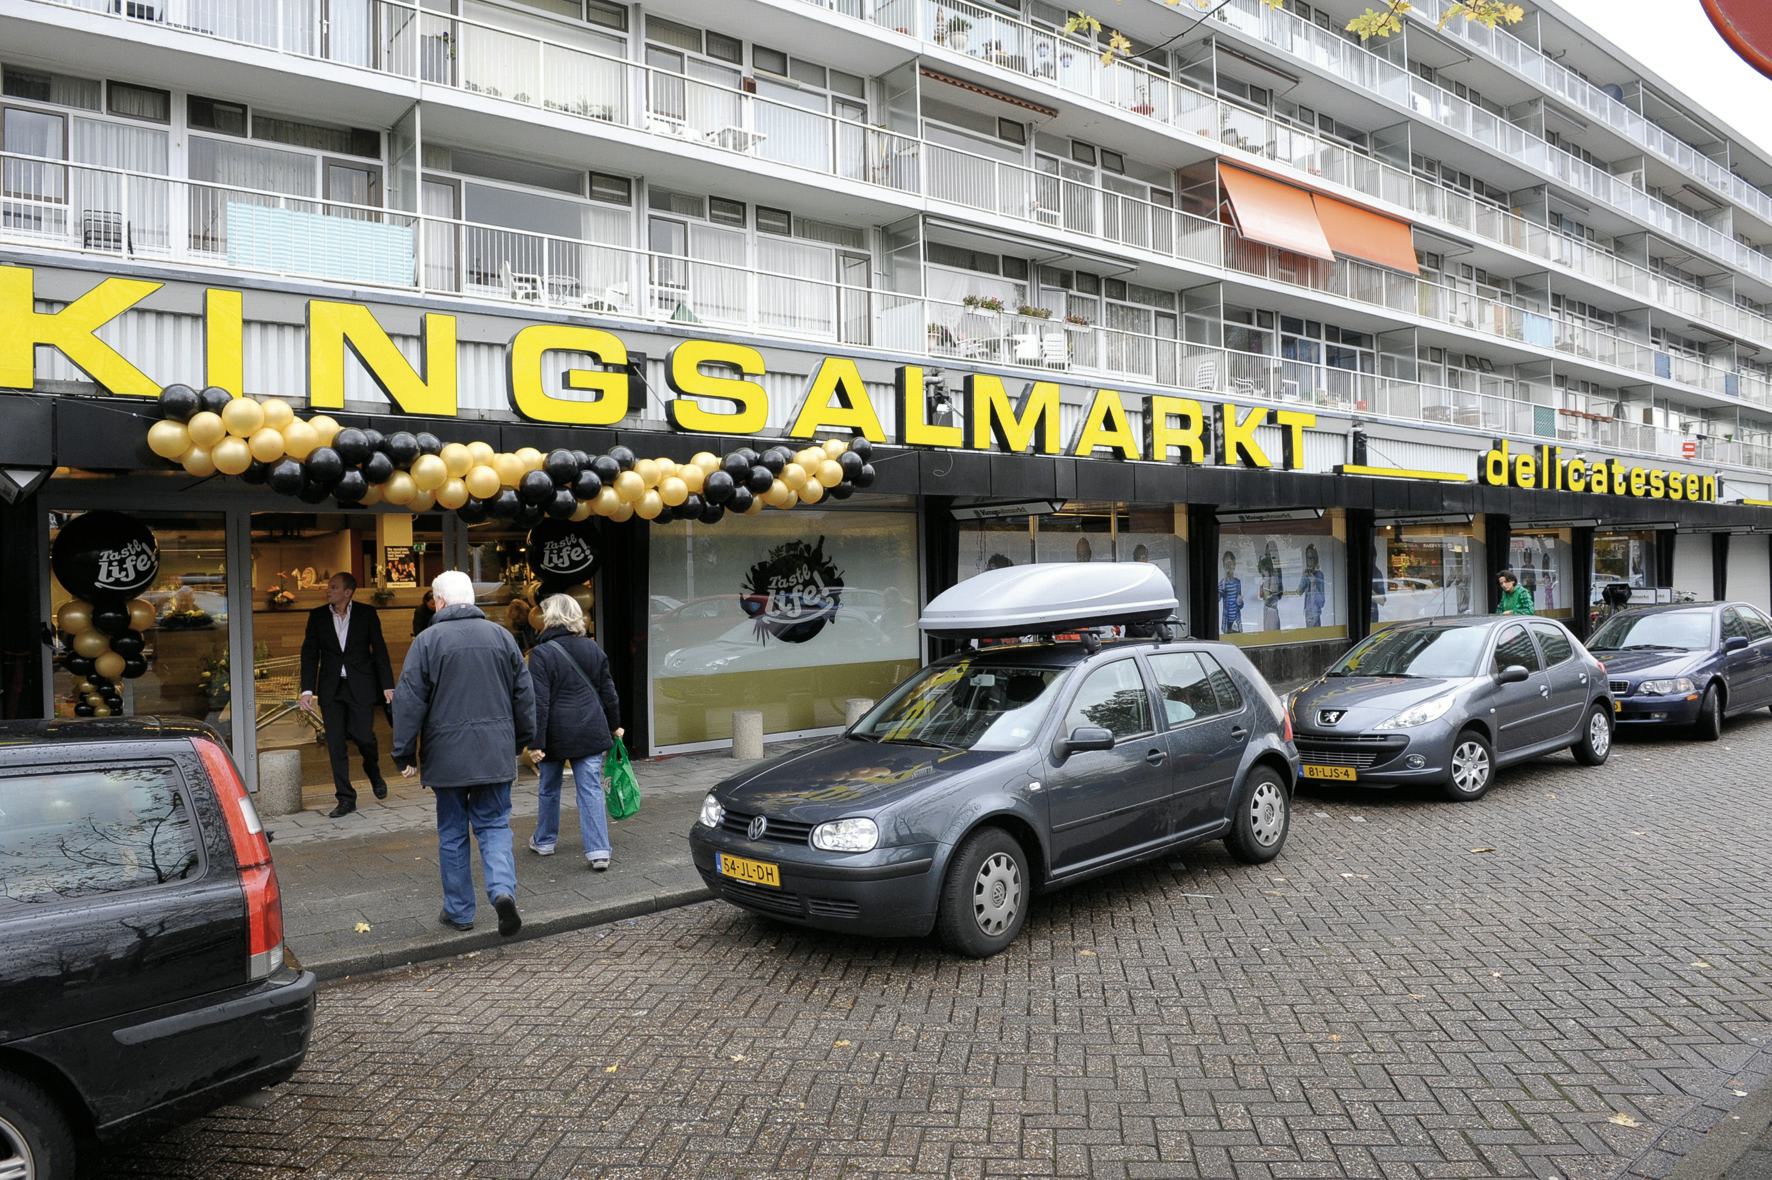 De Kingsalmarkt in 2011. Foto: Fotopersbureau Dijkstra